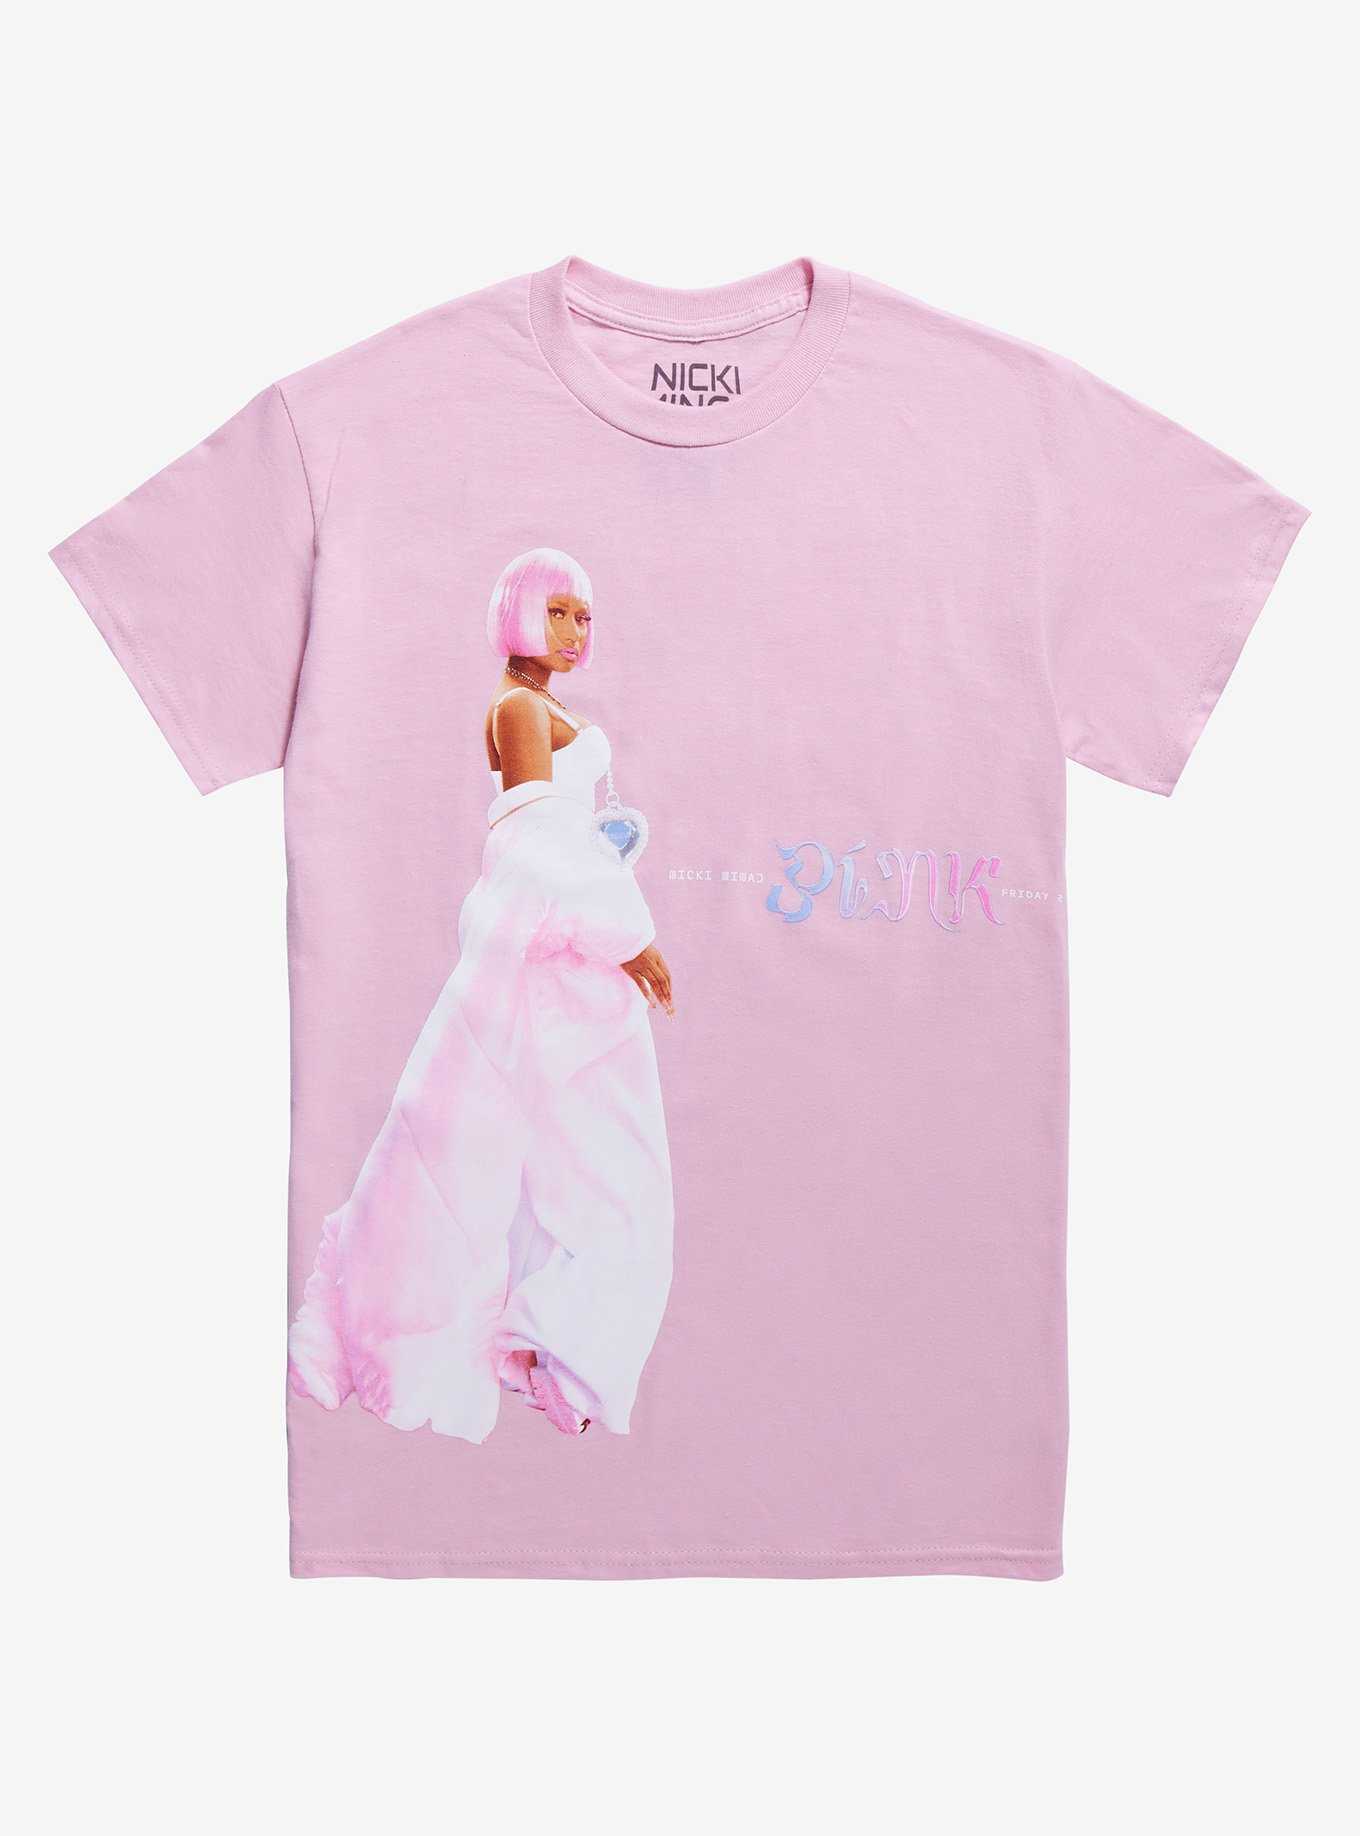 Nicki Minaj Pink Friday 2 Boyfriend Fit Girls T-Shirt, , hi-res